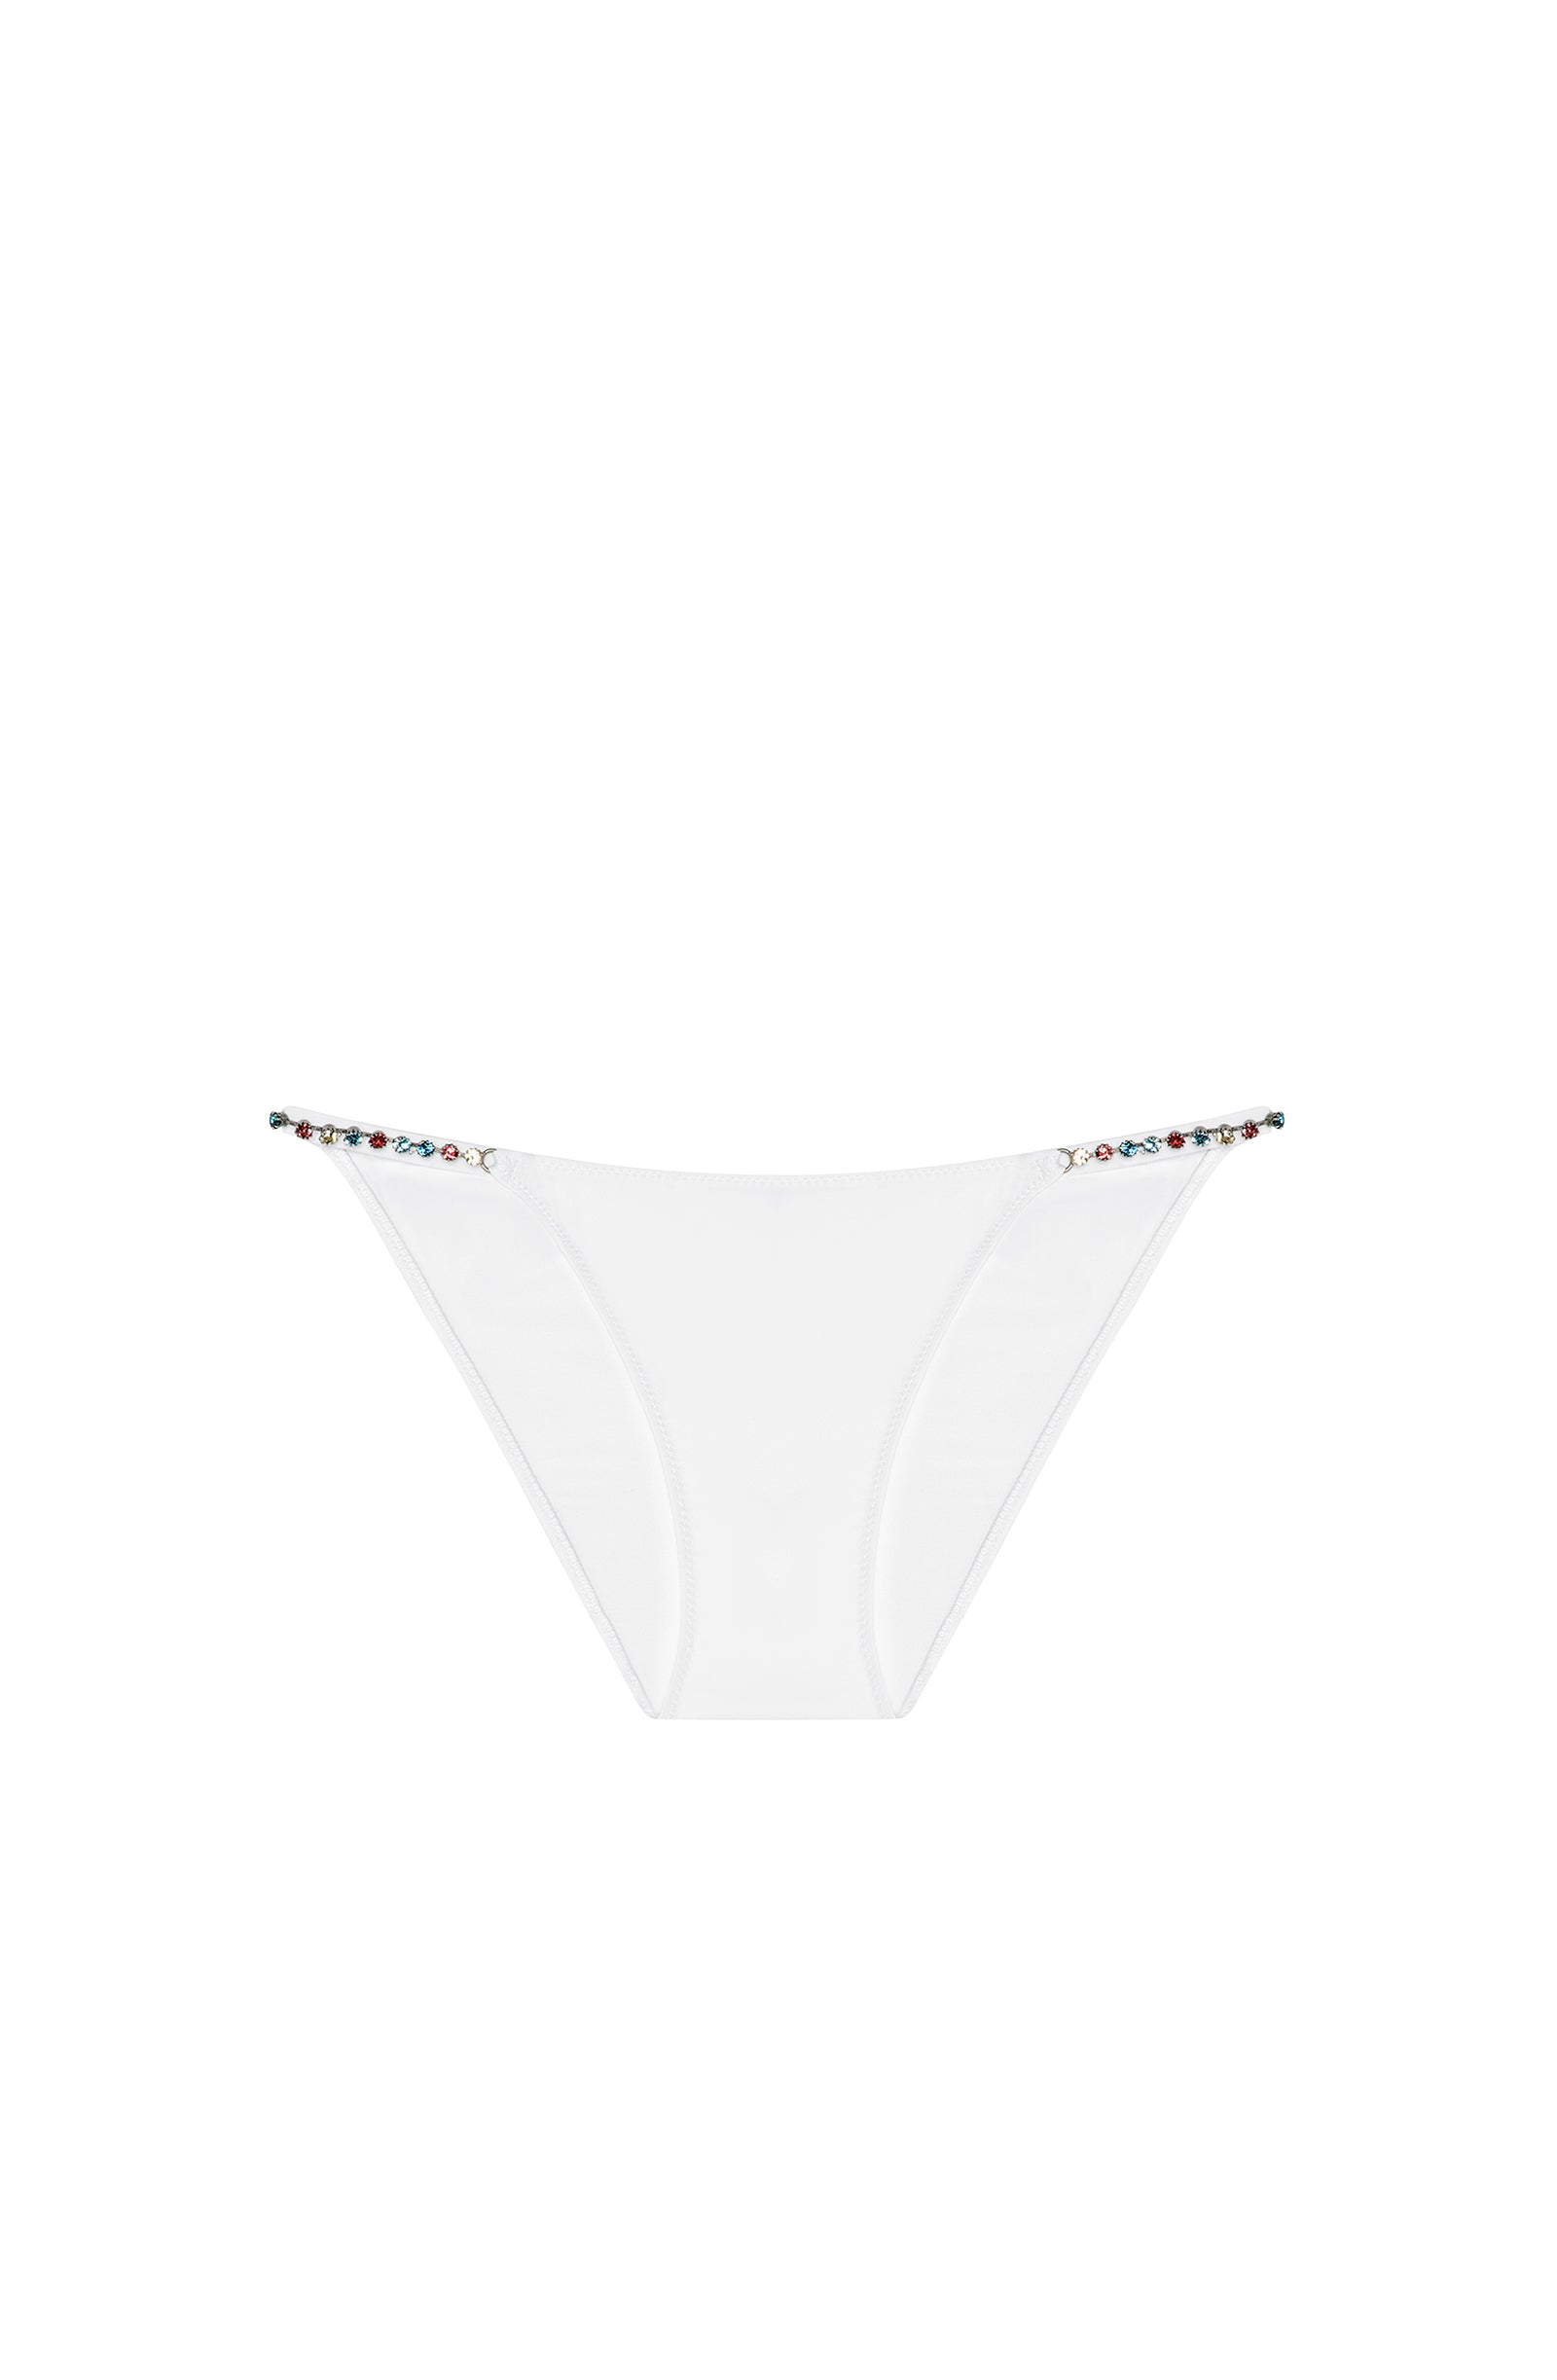 shiva - White jewel bikini bottoms